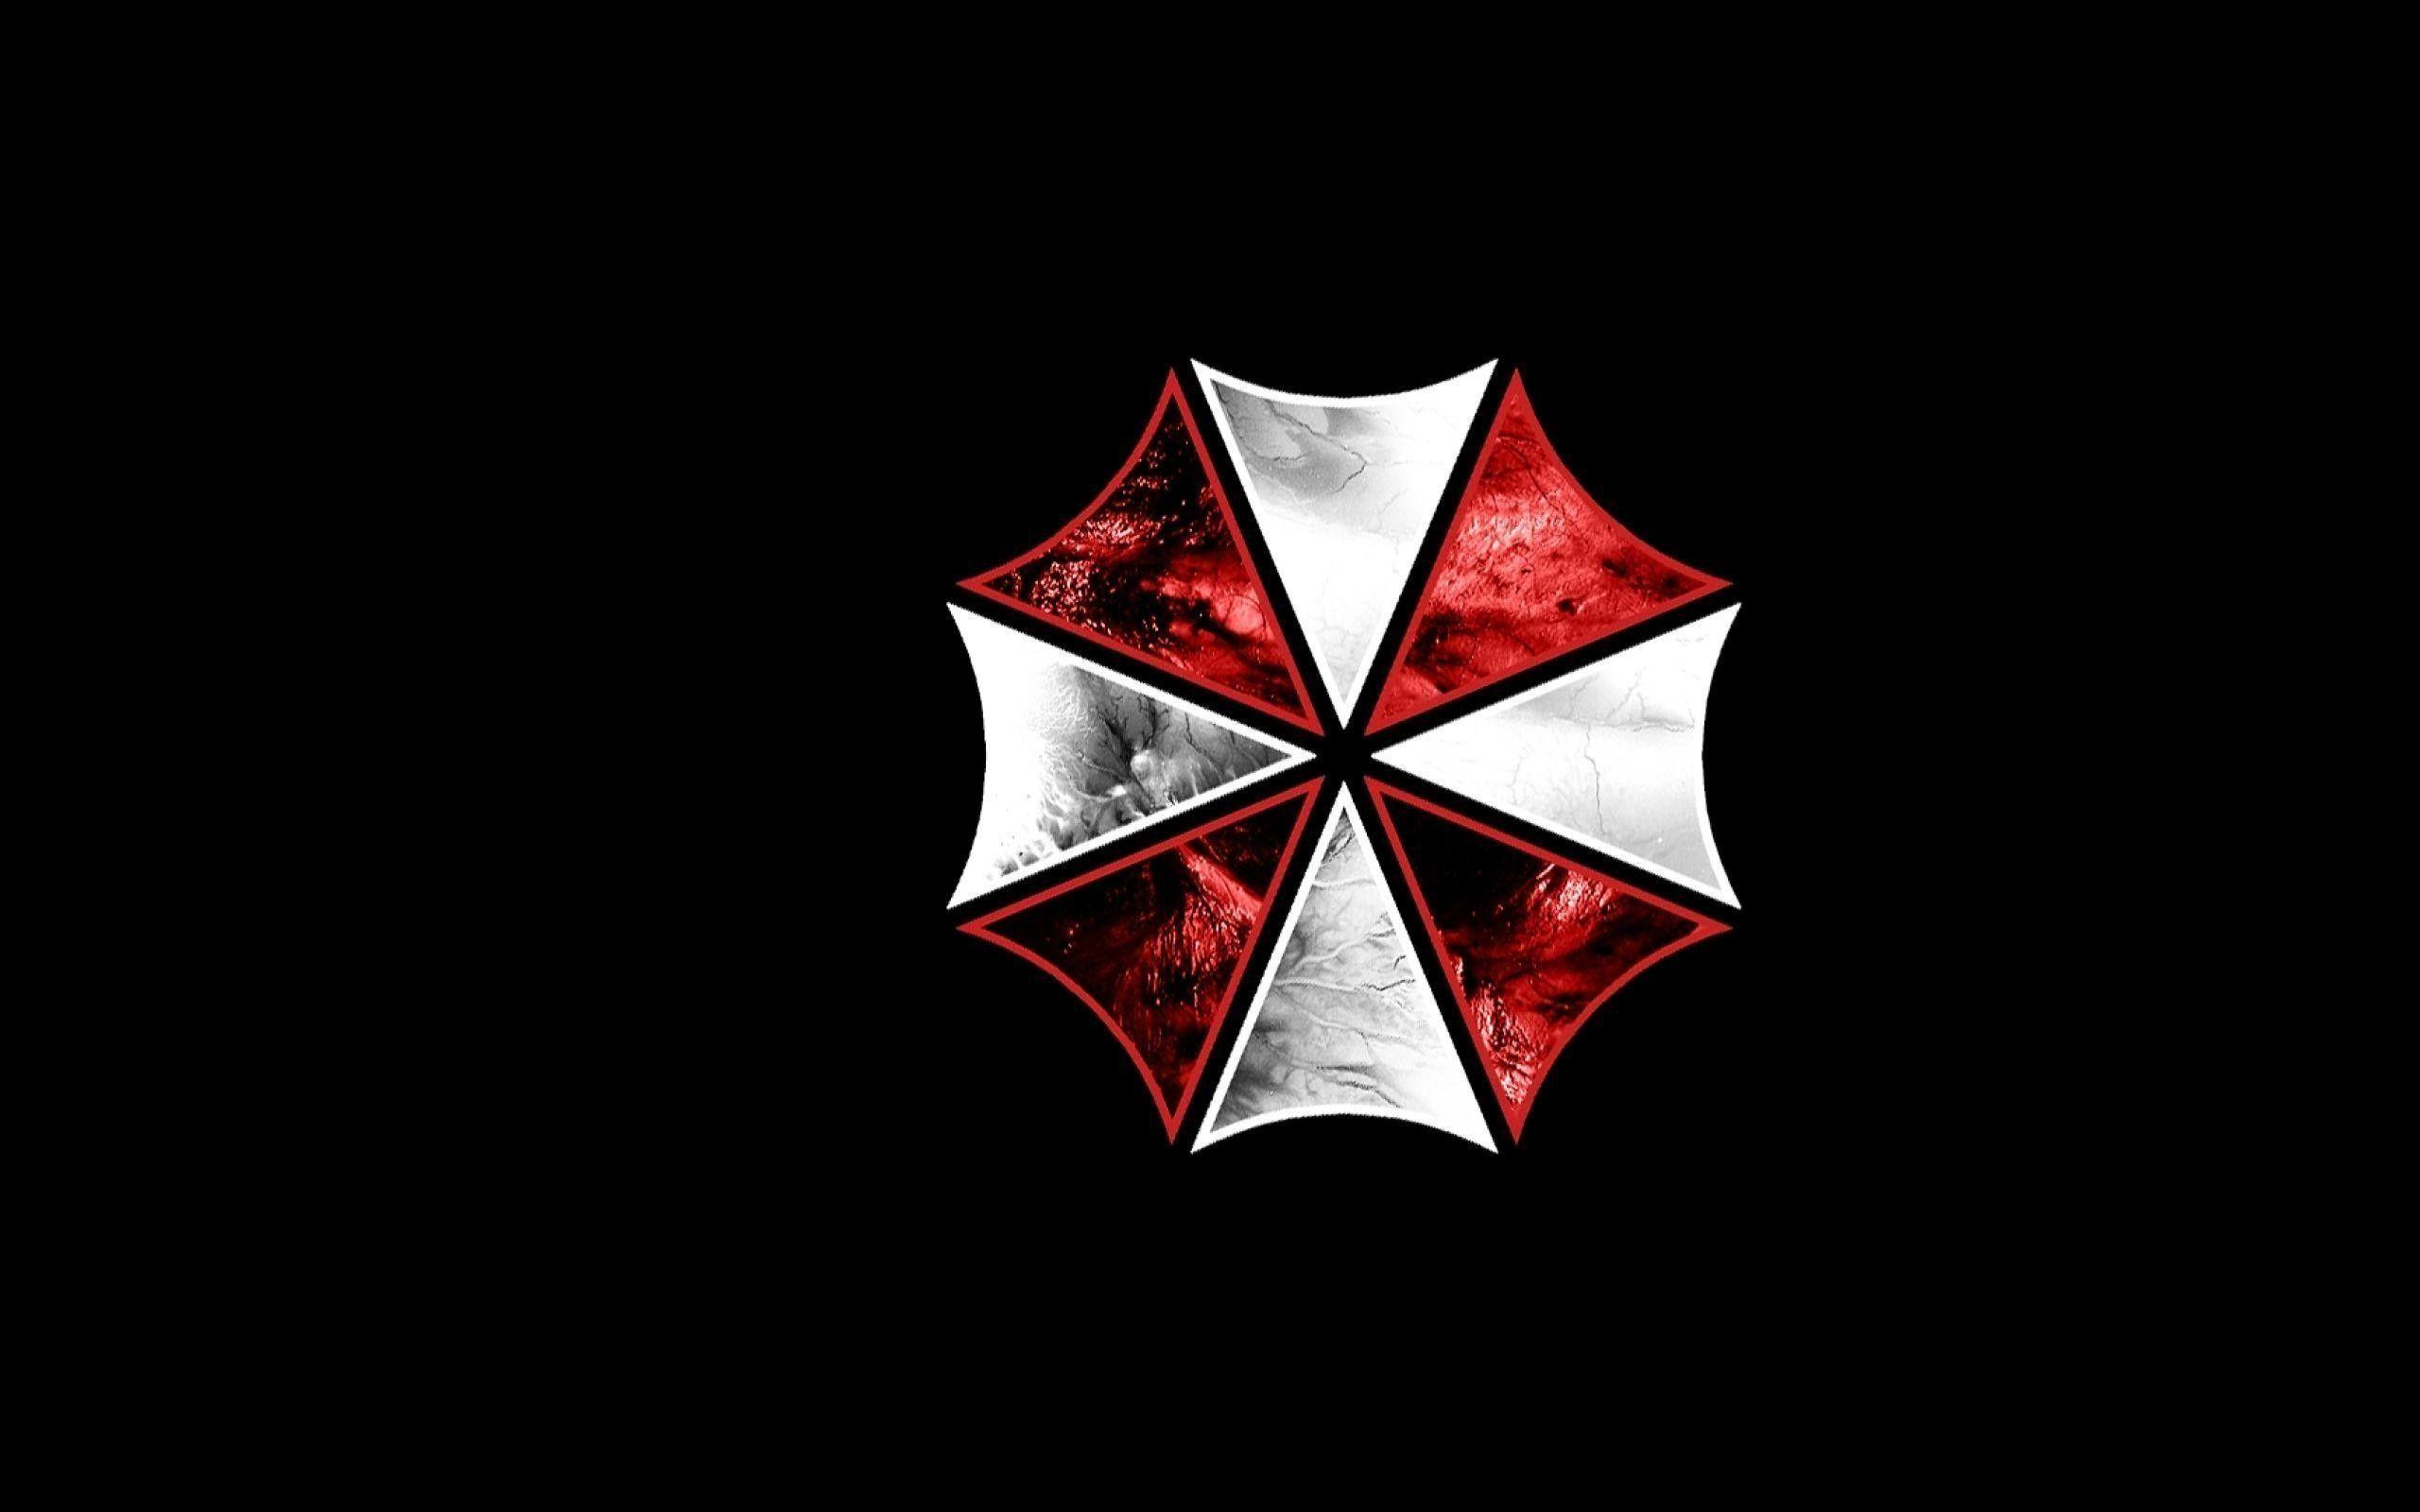 Wallpaper ID 657907  resident evil hd corp Umbrella Corp x art  umbrella Resident Evil games 720P umbrellas video free download